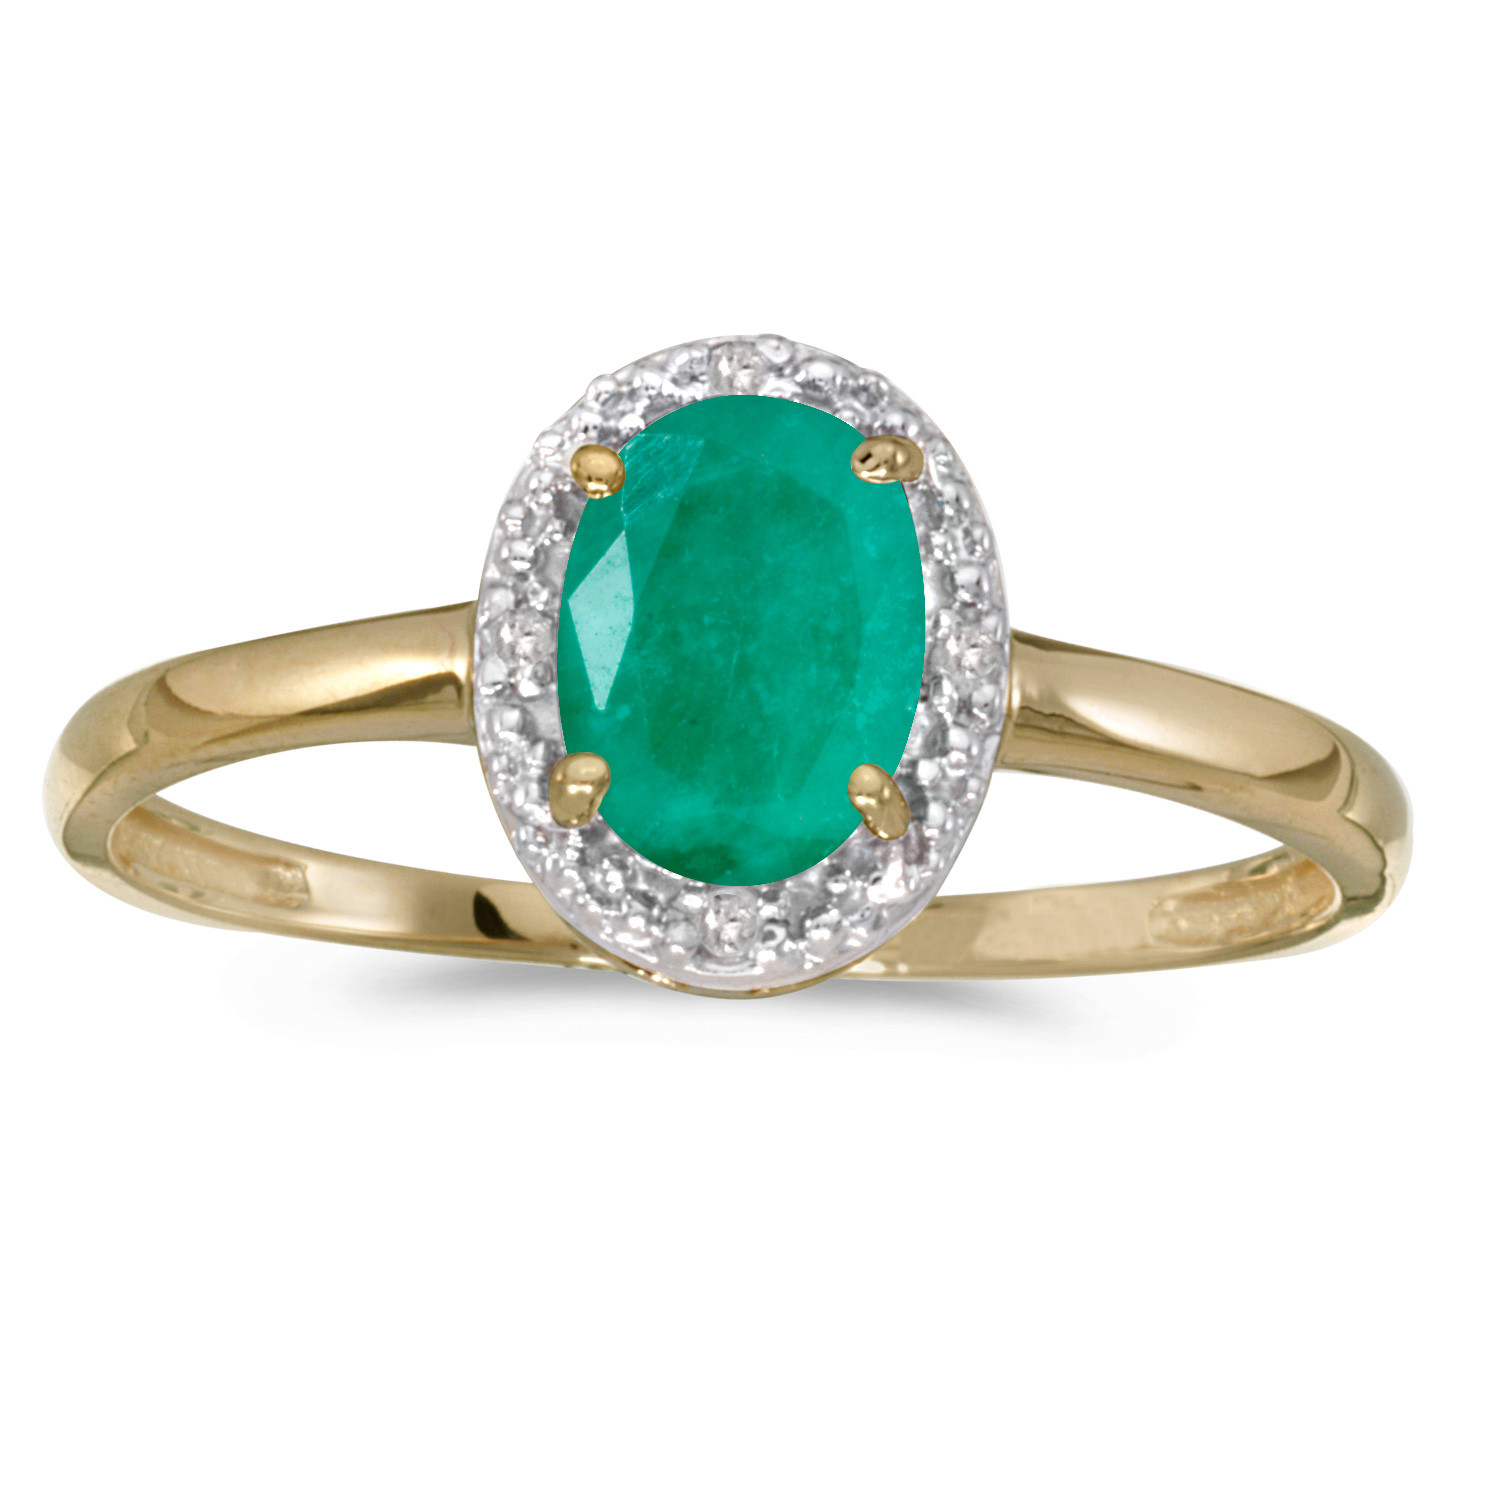 Diamond Rings At Walmart
 10k Yellow Gold Oval Emerald And Diamond Ring Walmart